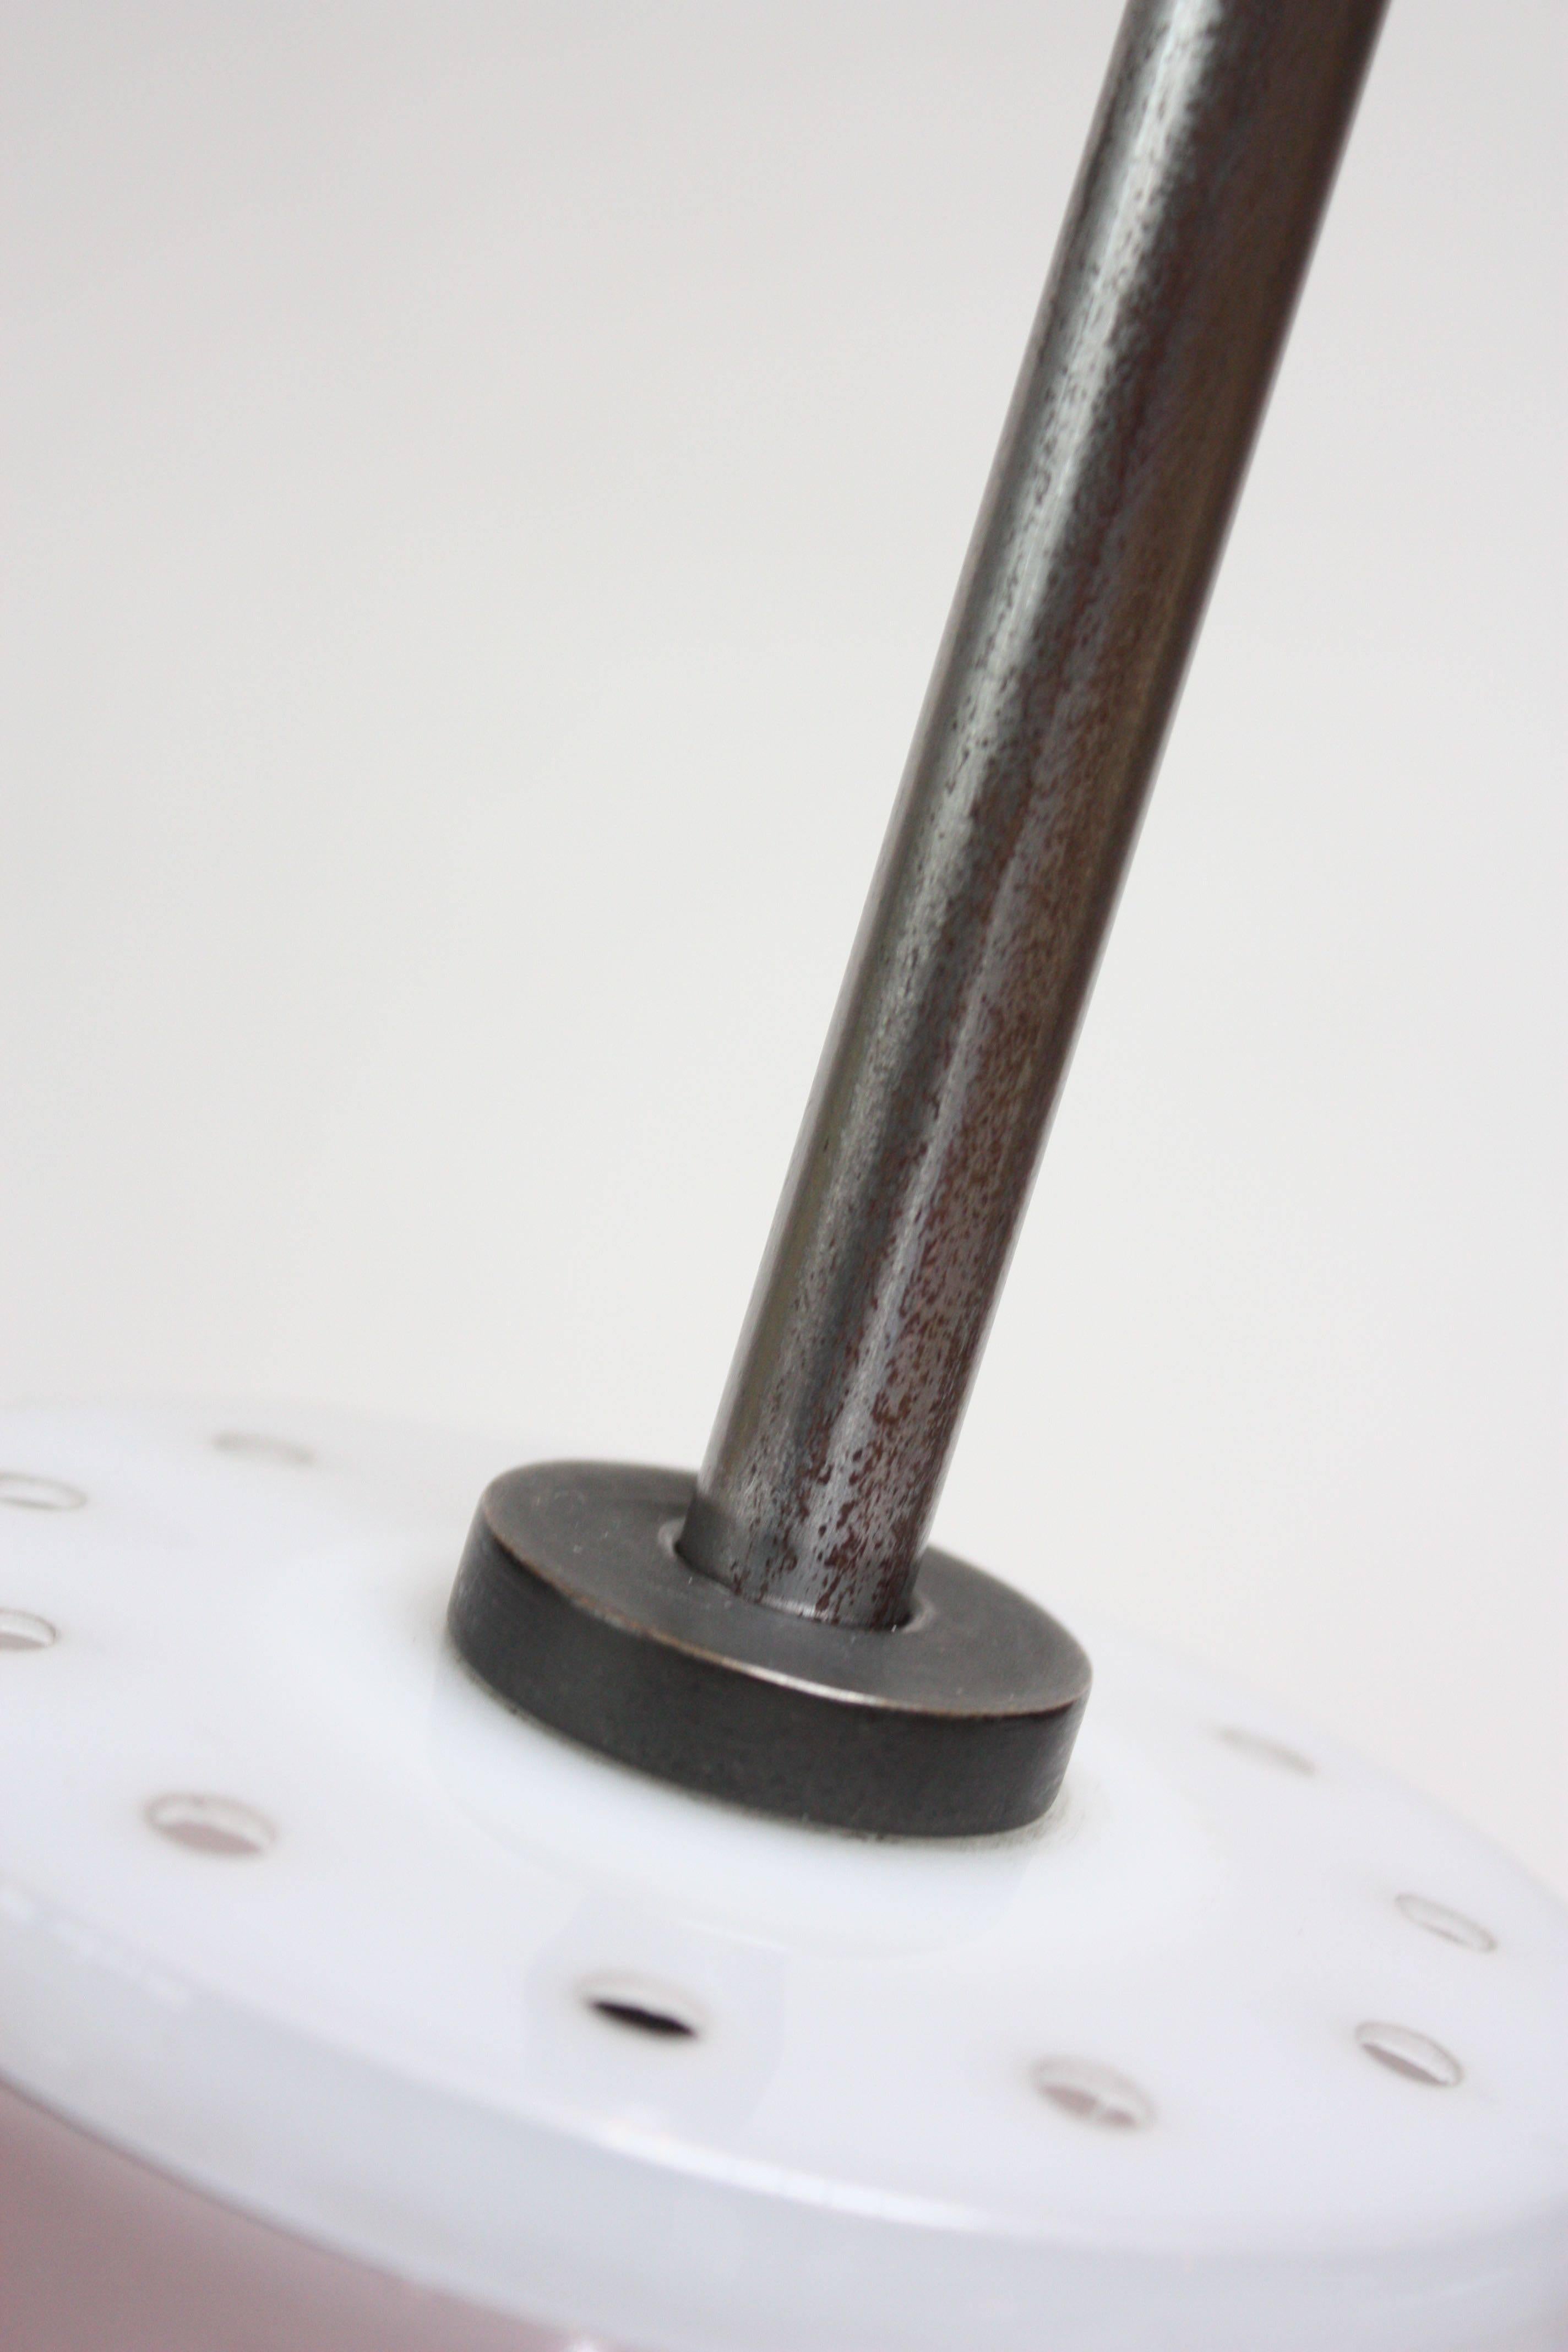 Italian Modern Adjustable Floor Lamp Attributed to Gino Sarfatti For Sale 7